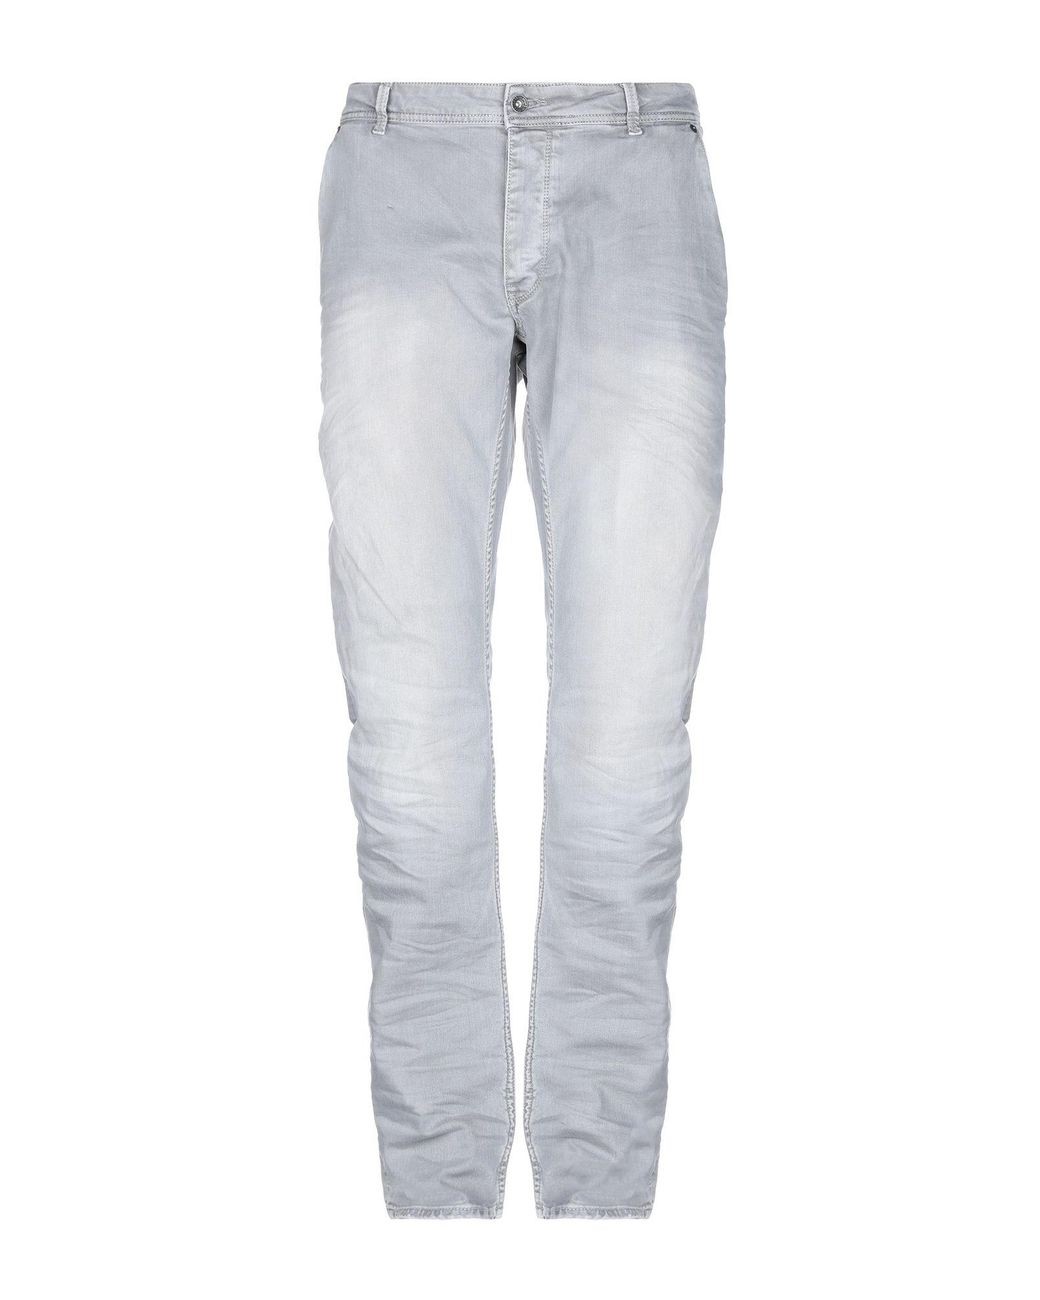 Pepe Jeans Denim Pants in Grey (Gray) for Men - Lyst